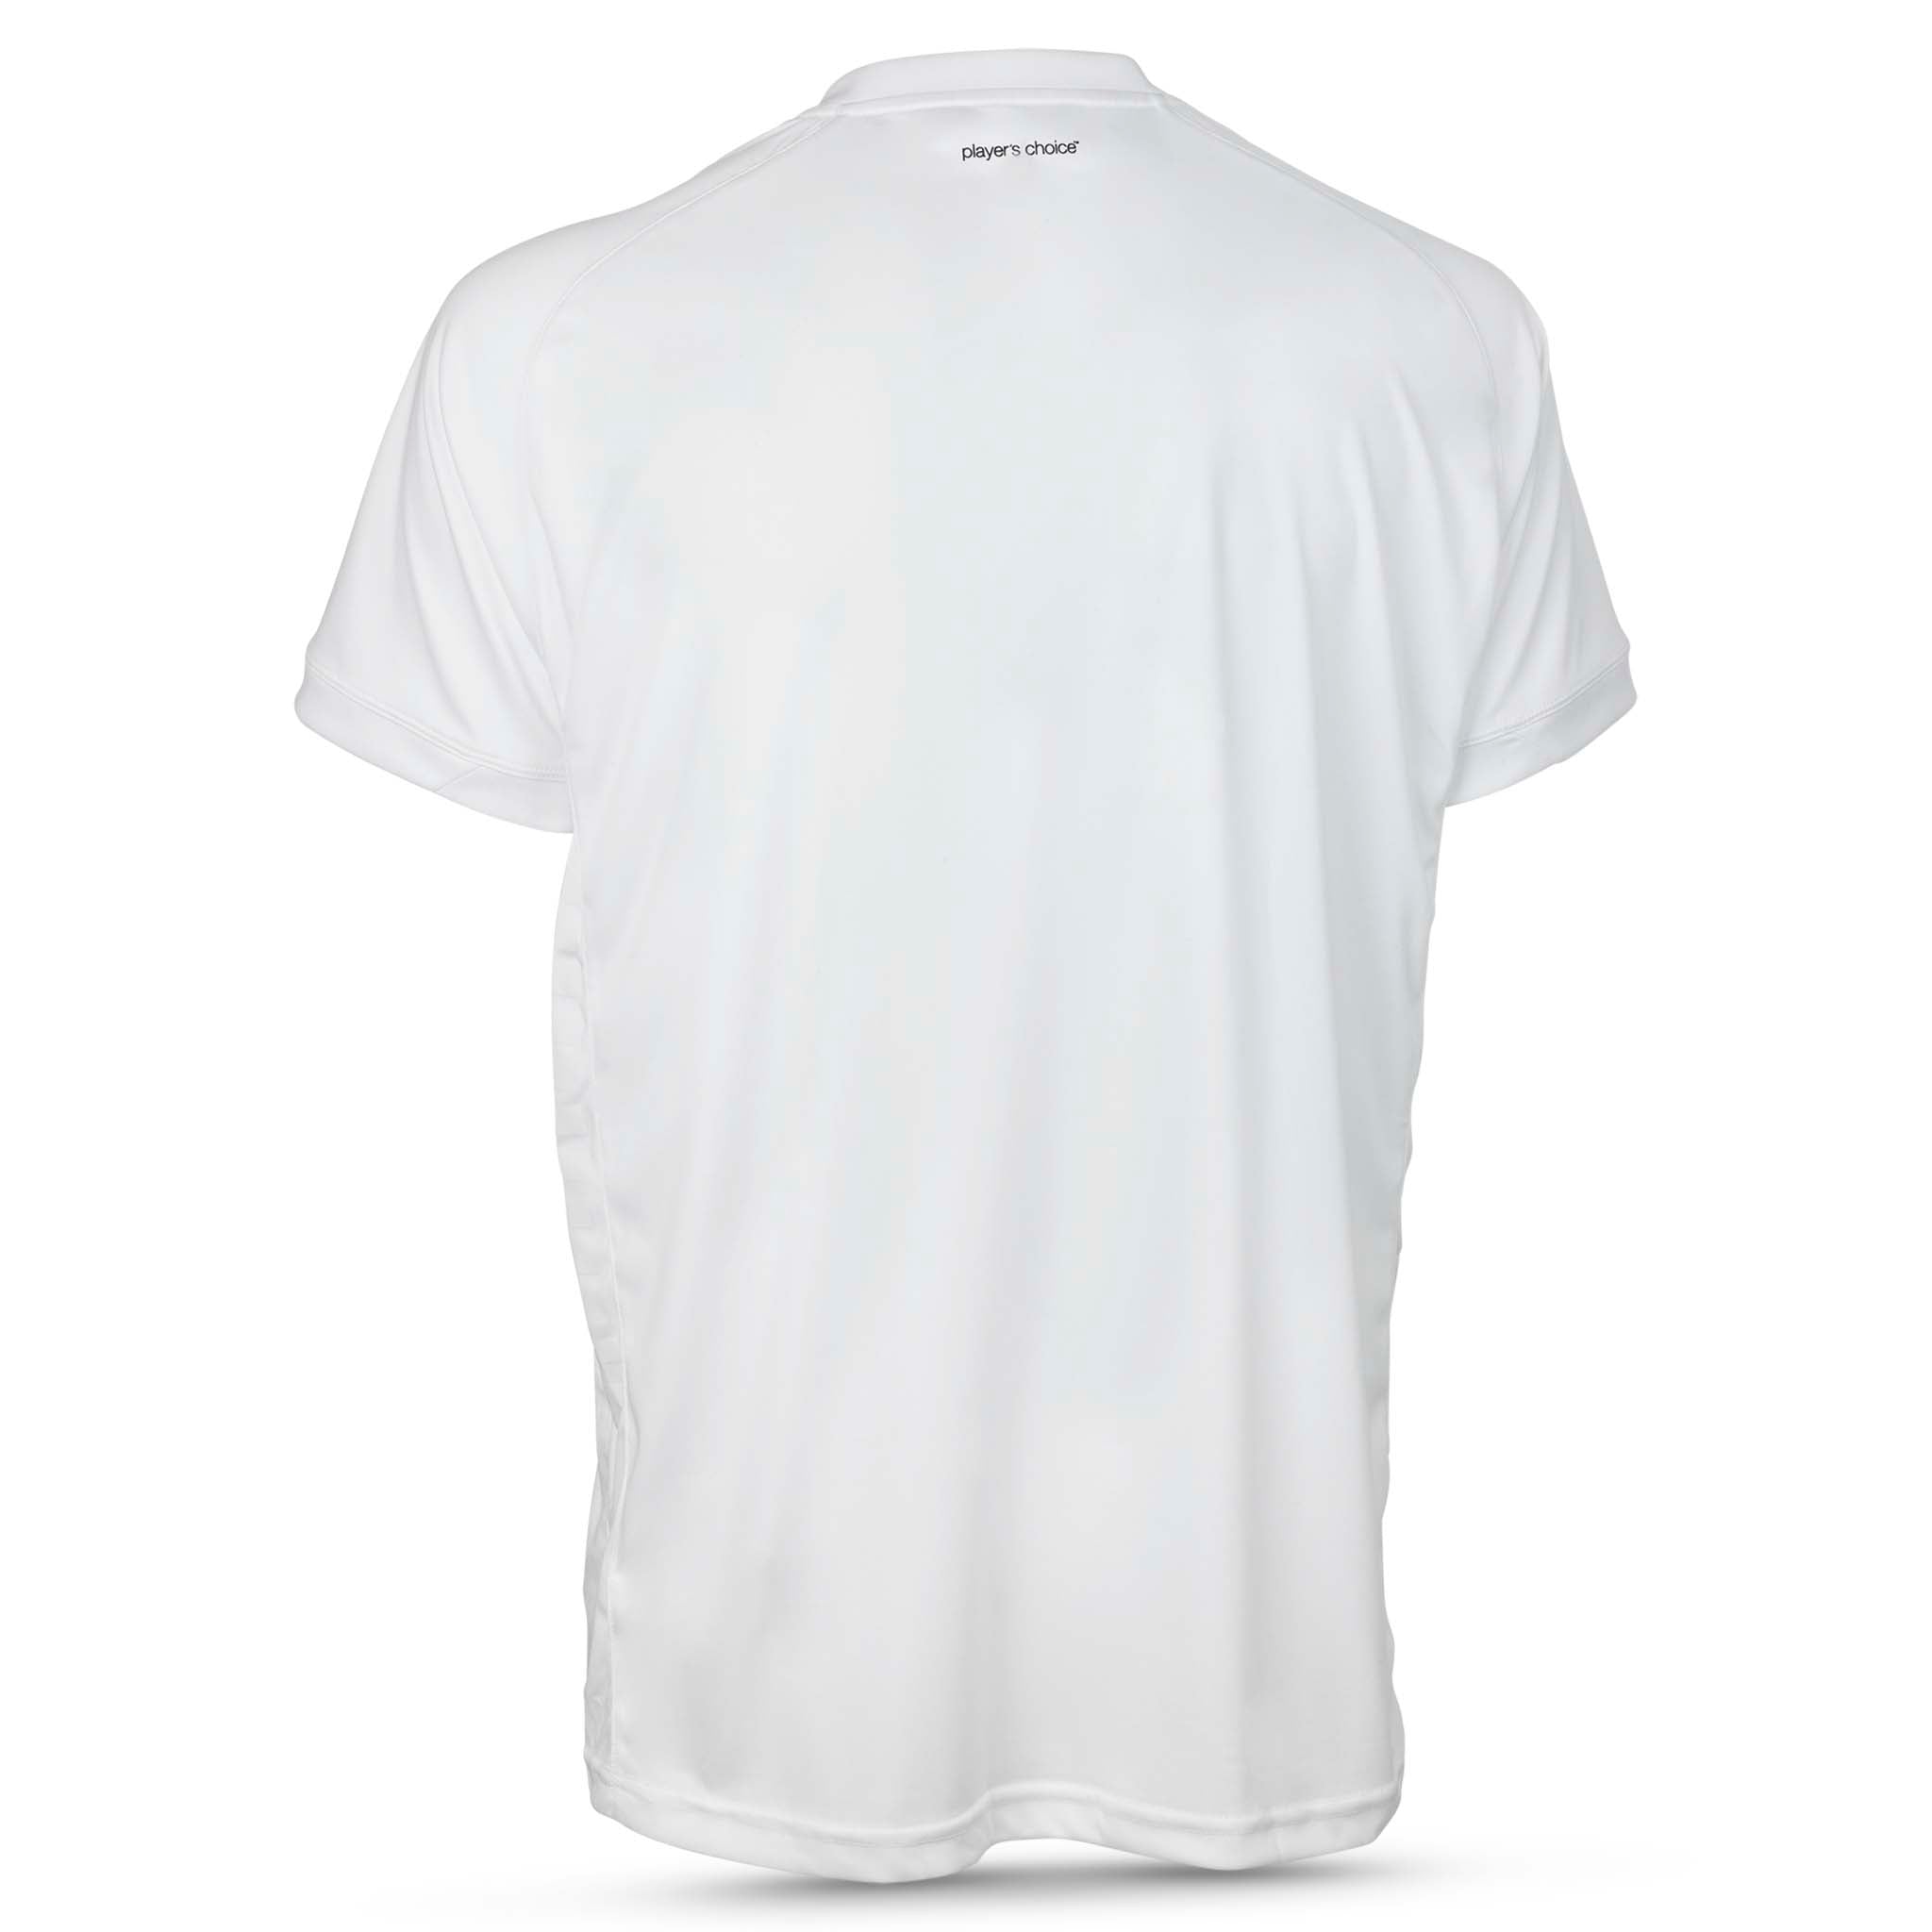 Spain Short Sleeve player shirt #colour_white